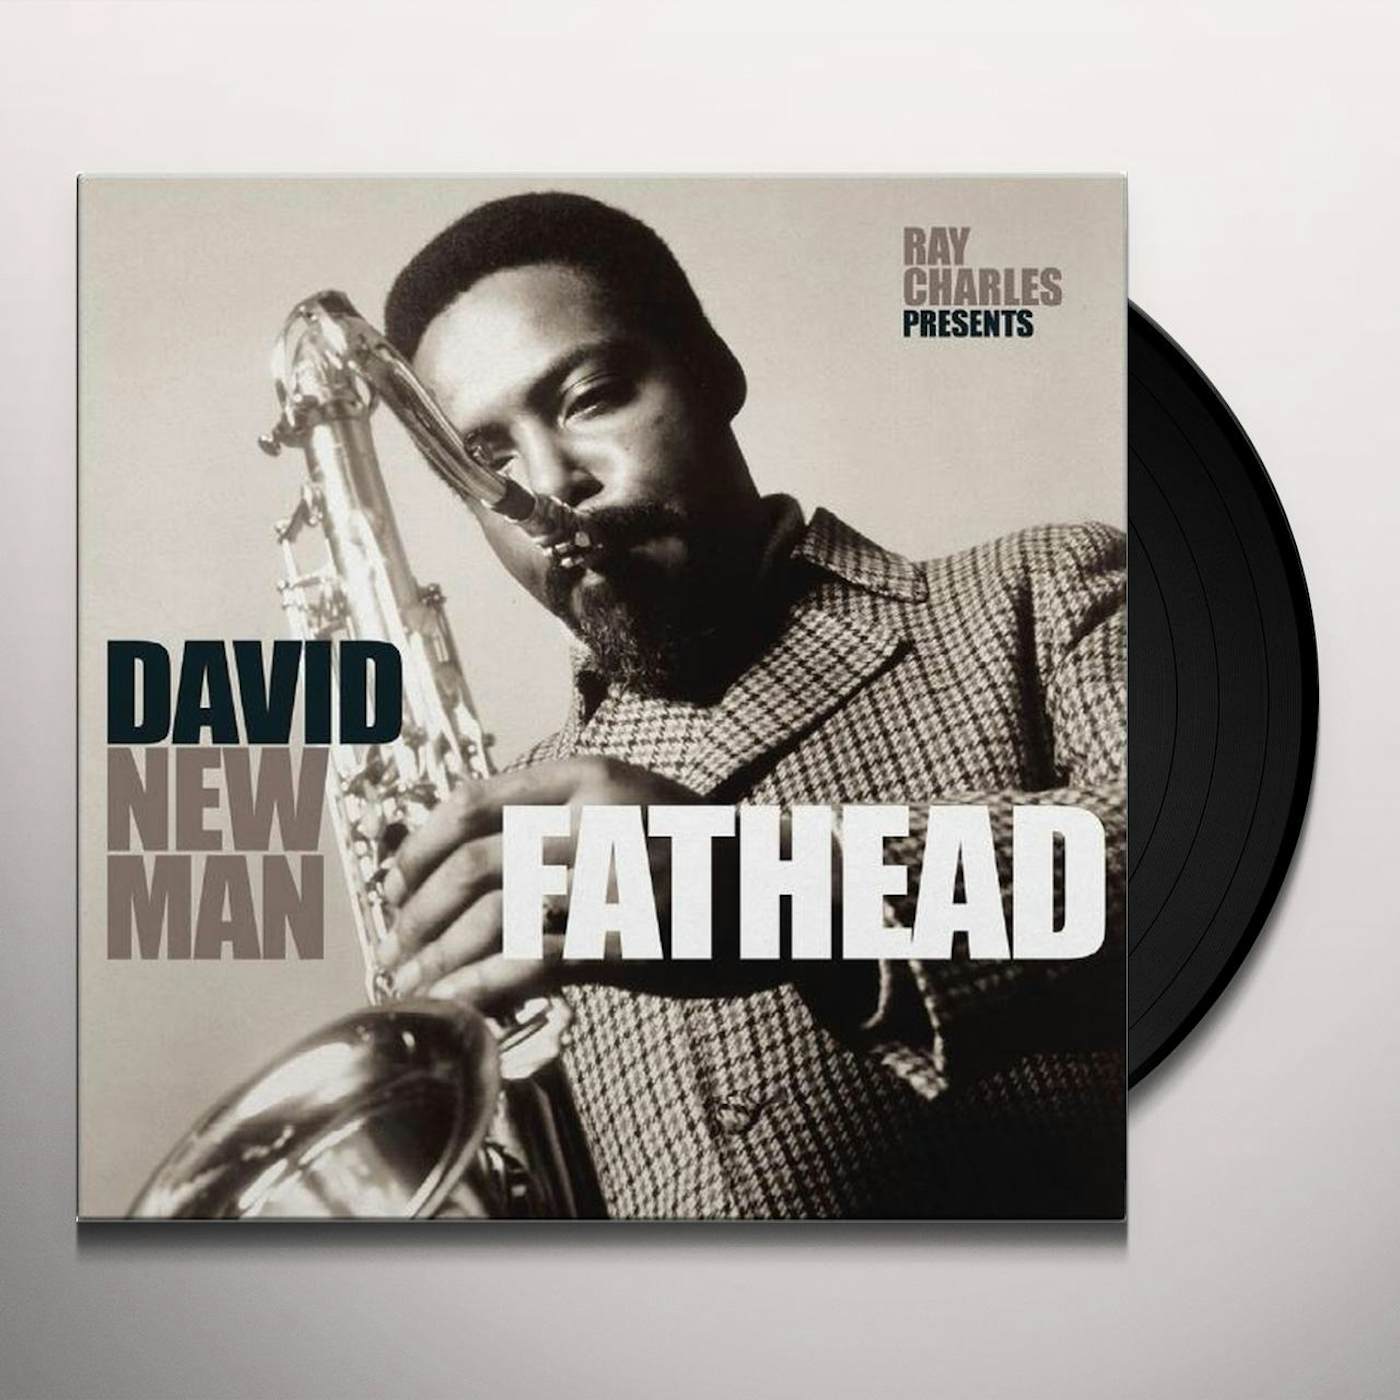 FATHEAD (RAY CHARLES PRESENTS DAVID NEWMAN) Vinyl Record